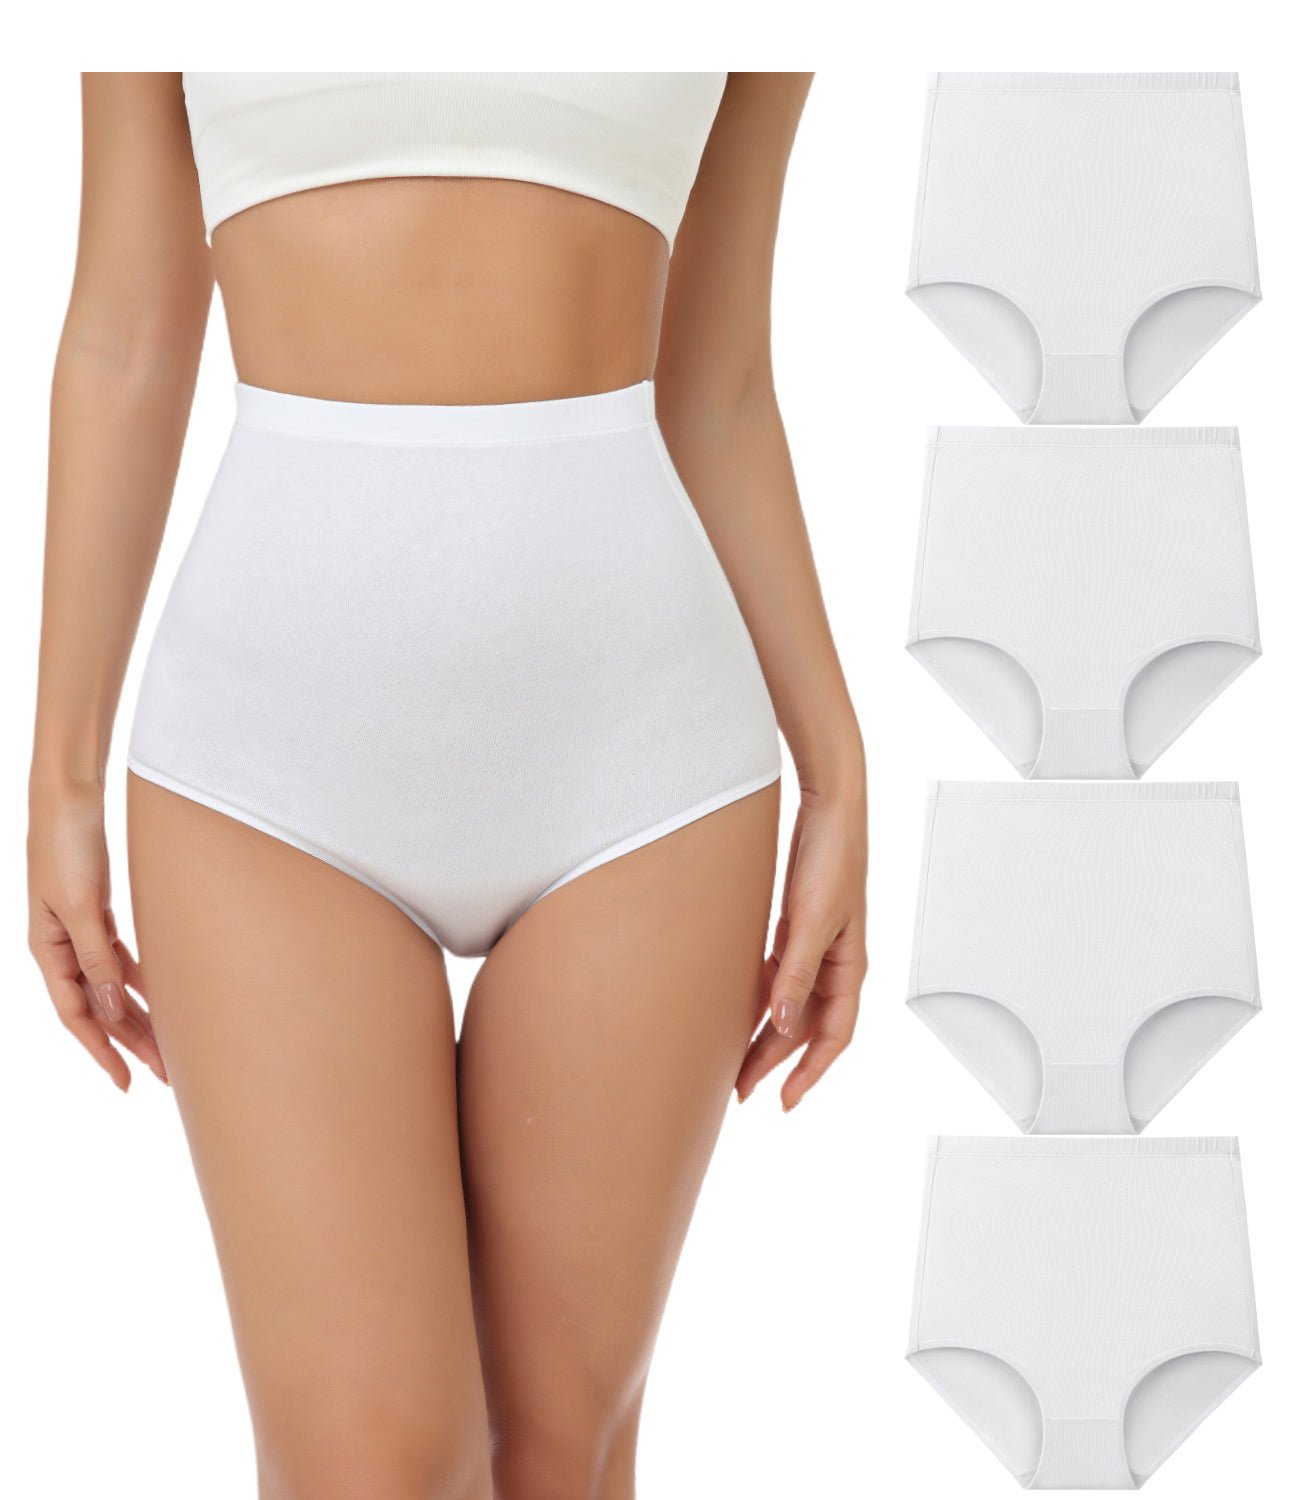 wirarpa Women's Cotton Underwear High Waist Briefs Panties Full Coverage  Underpants White 5 Pack Sizes 5-10 